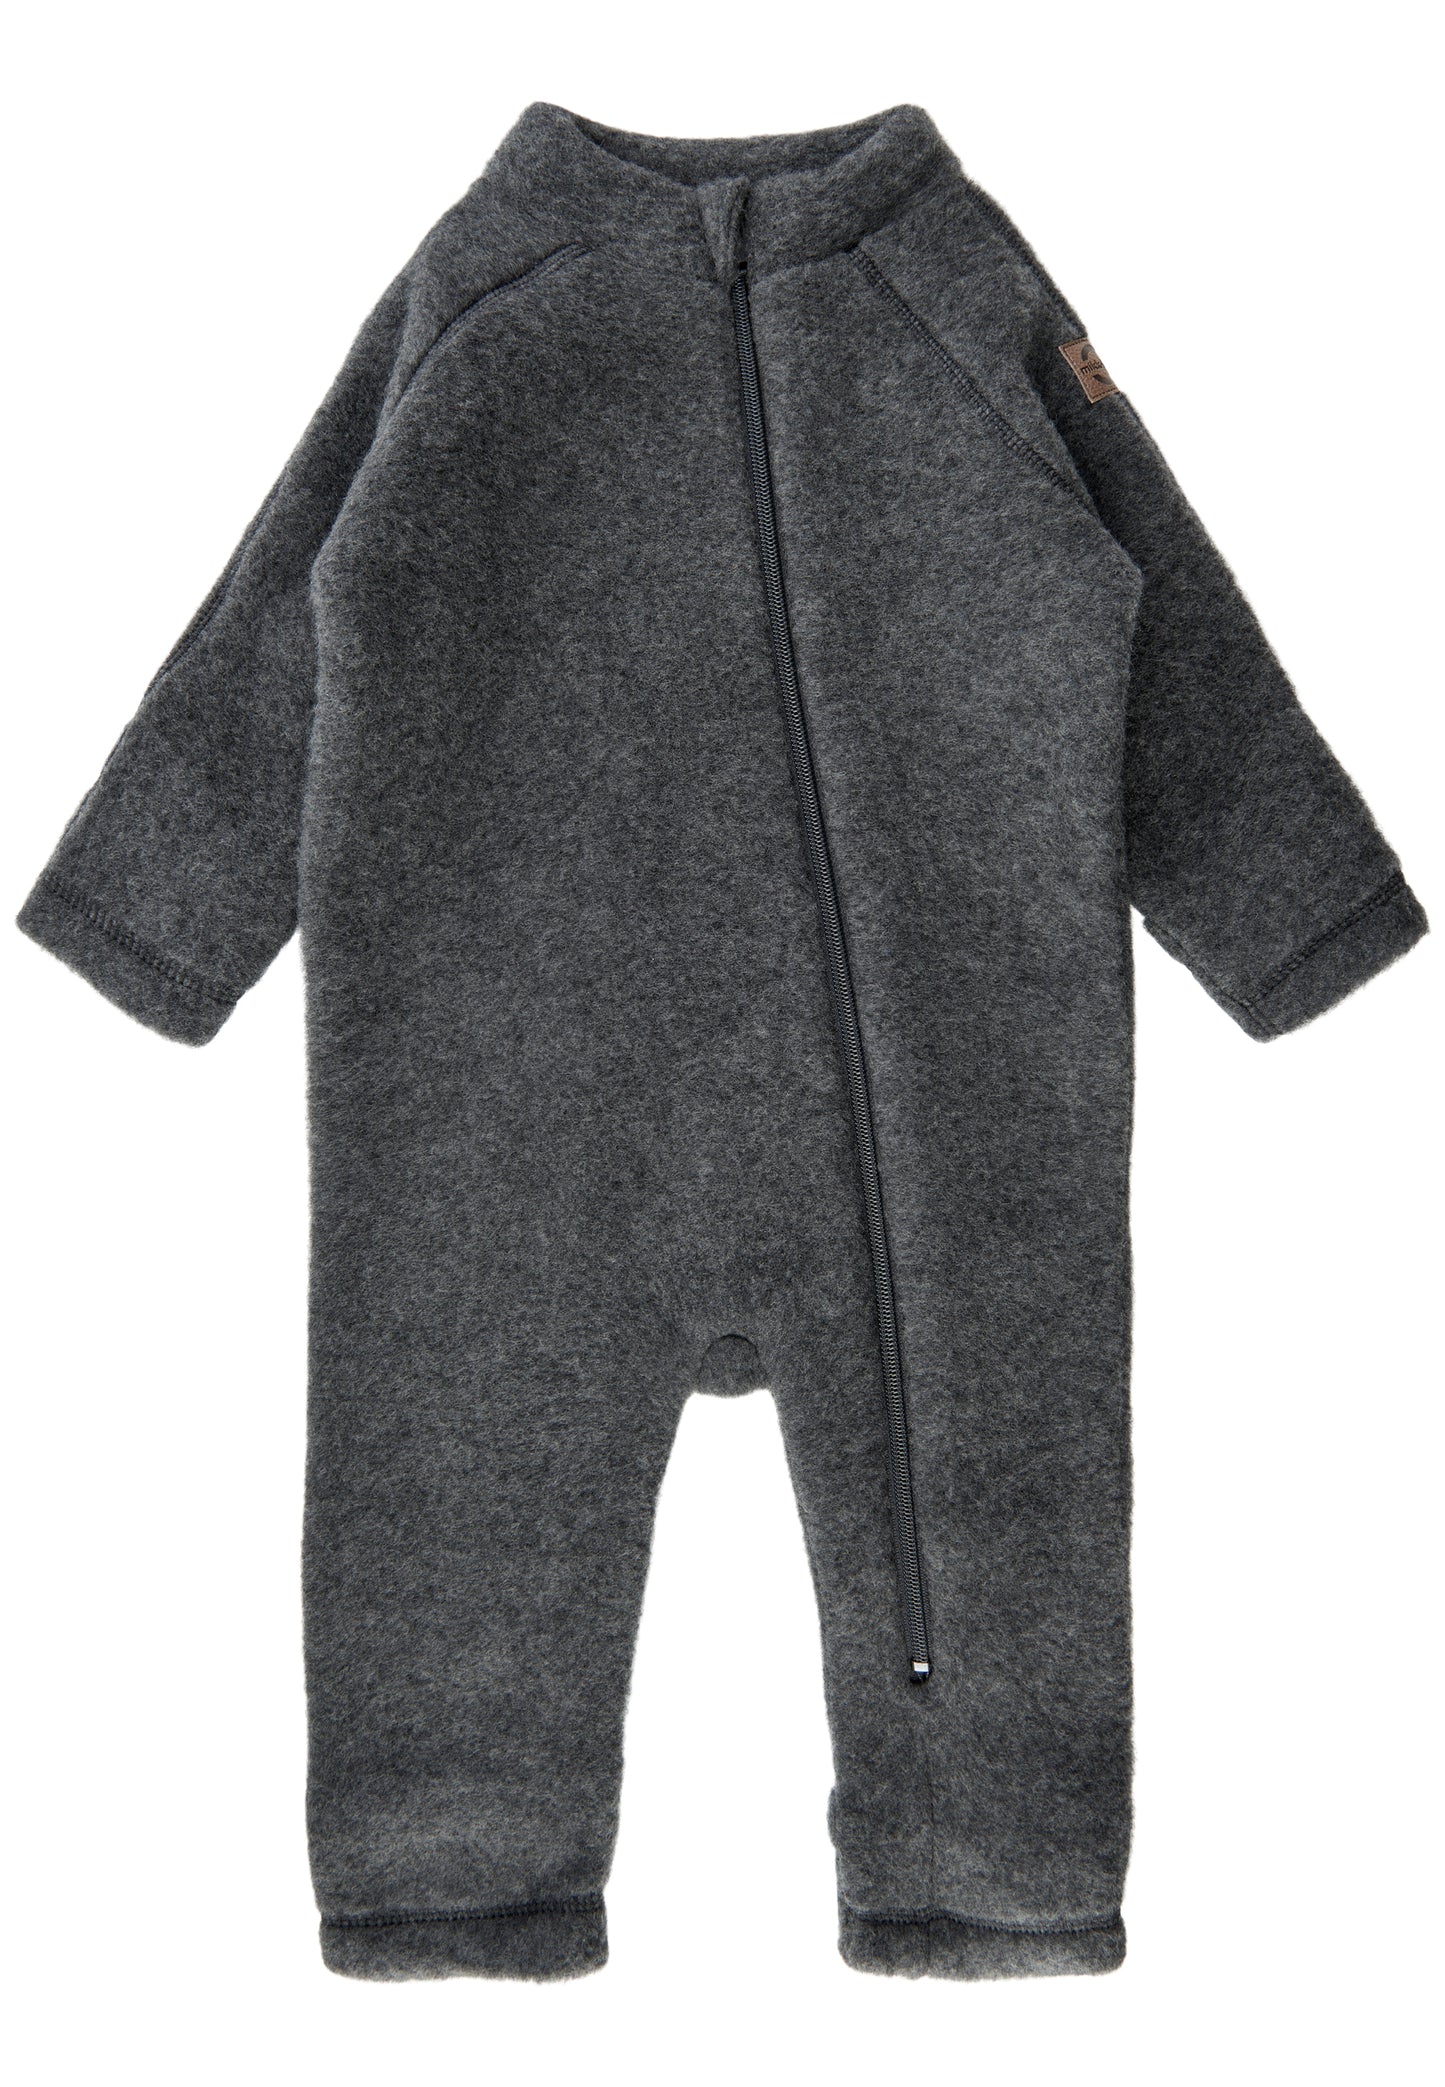 Wool Baby Suit - Anthracite Melange